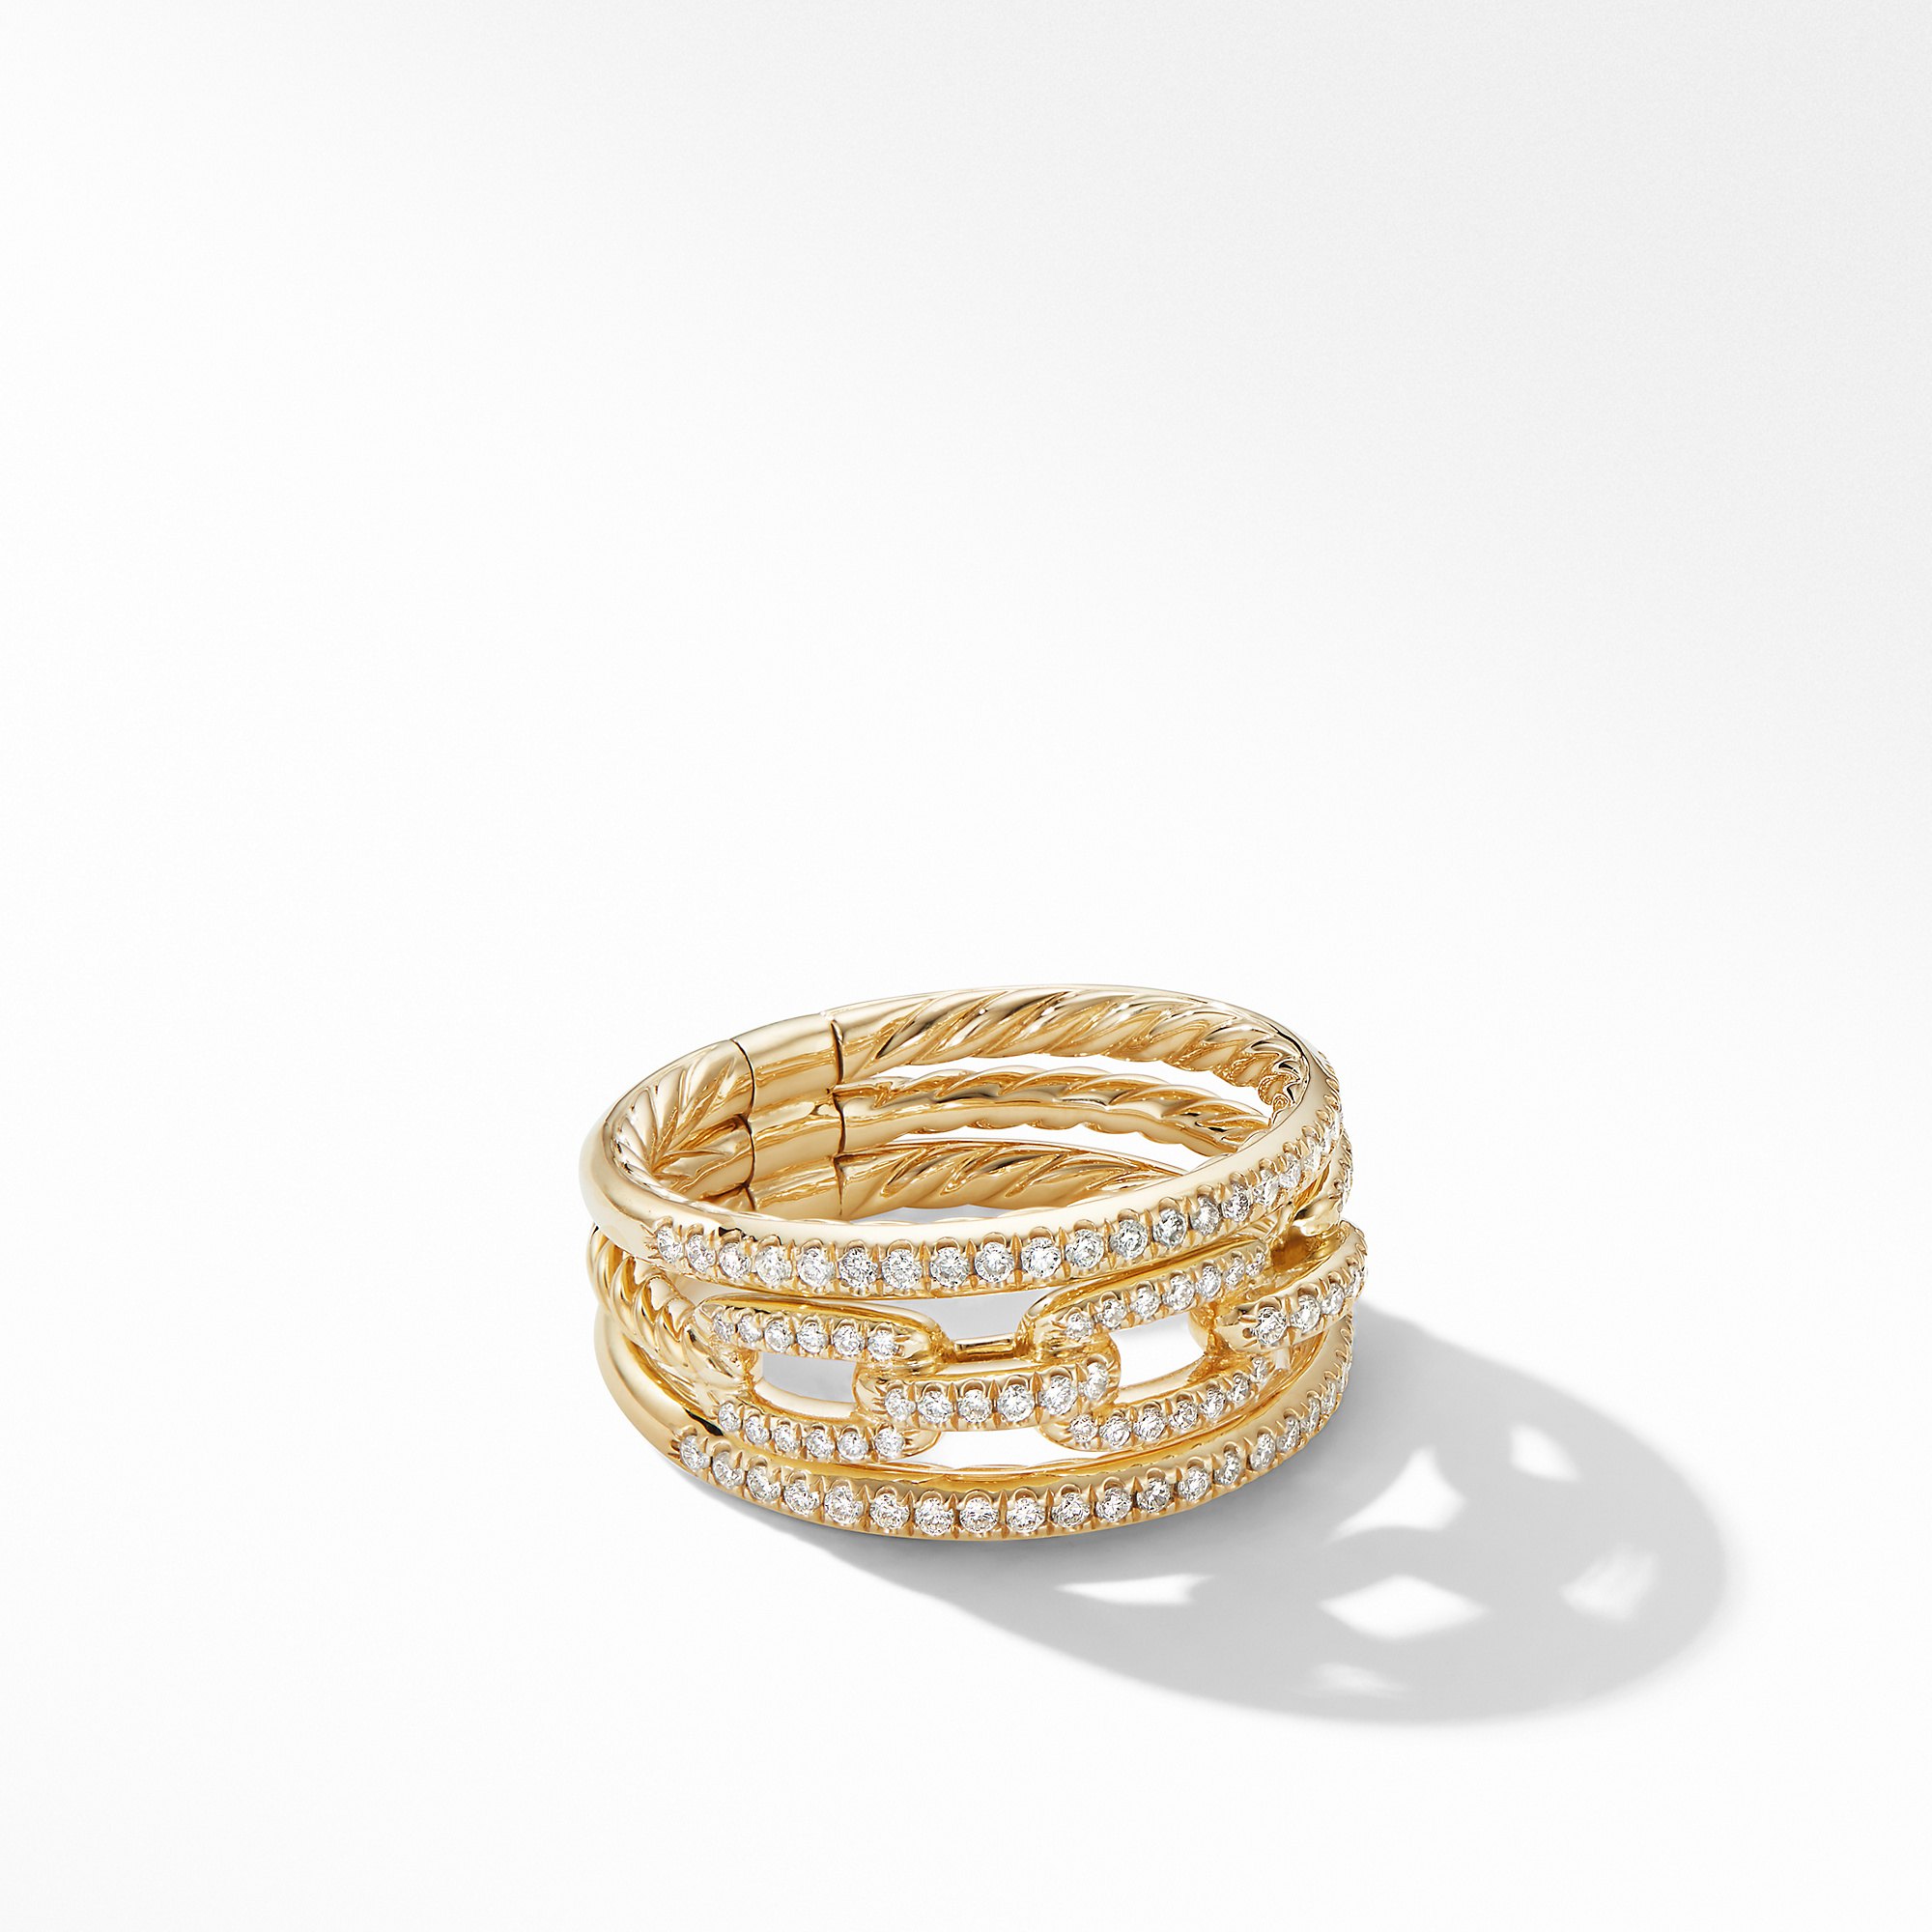 David Yurman Stax Three-Row Chain Link Ring in 18K Yellow Gold and Diamonds 0